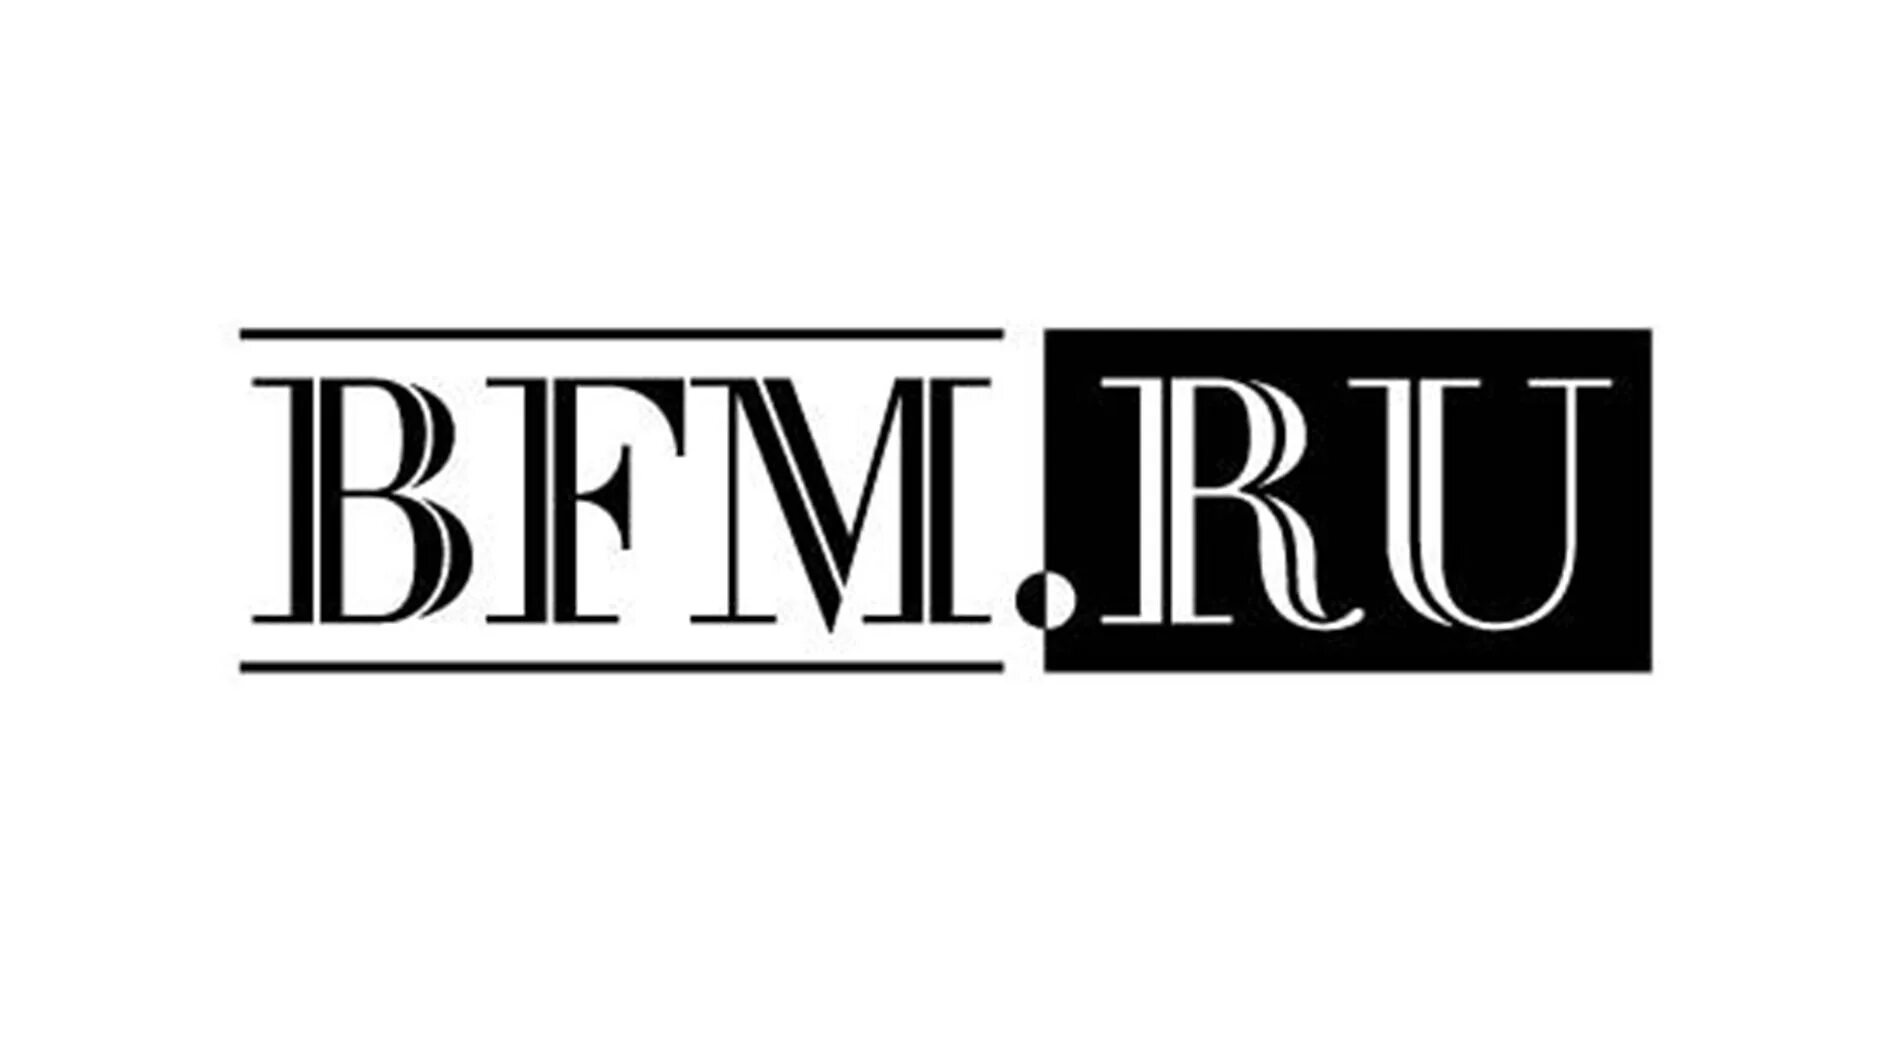 Радио бизнес фм прямой эфир. Бизнес ФМ логотип. Бизнес радио. Бизнес ФМ СПБ. Business fm - Санкт-Петербург логотип.